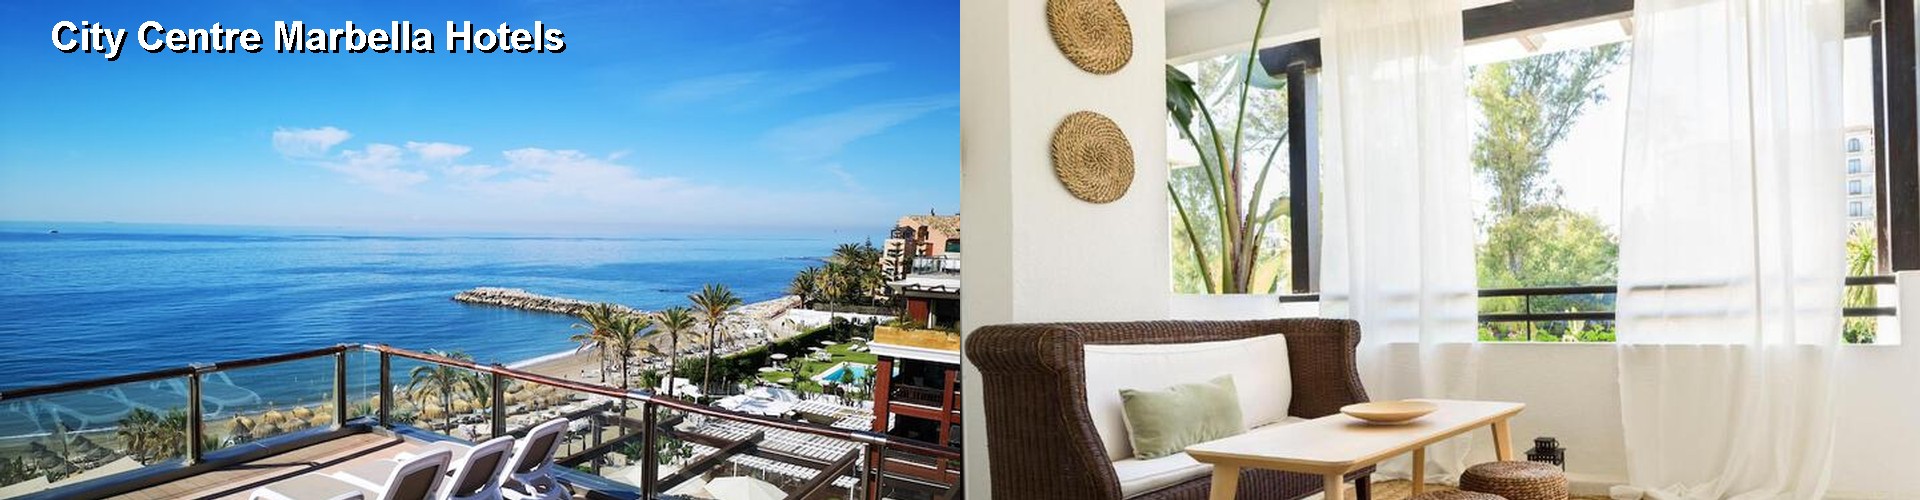 5 Best Hotels near City Centre Marbella